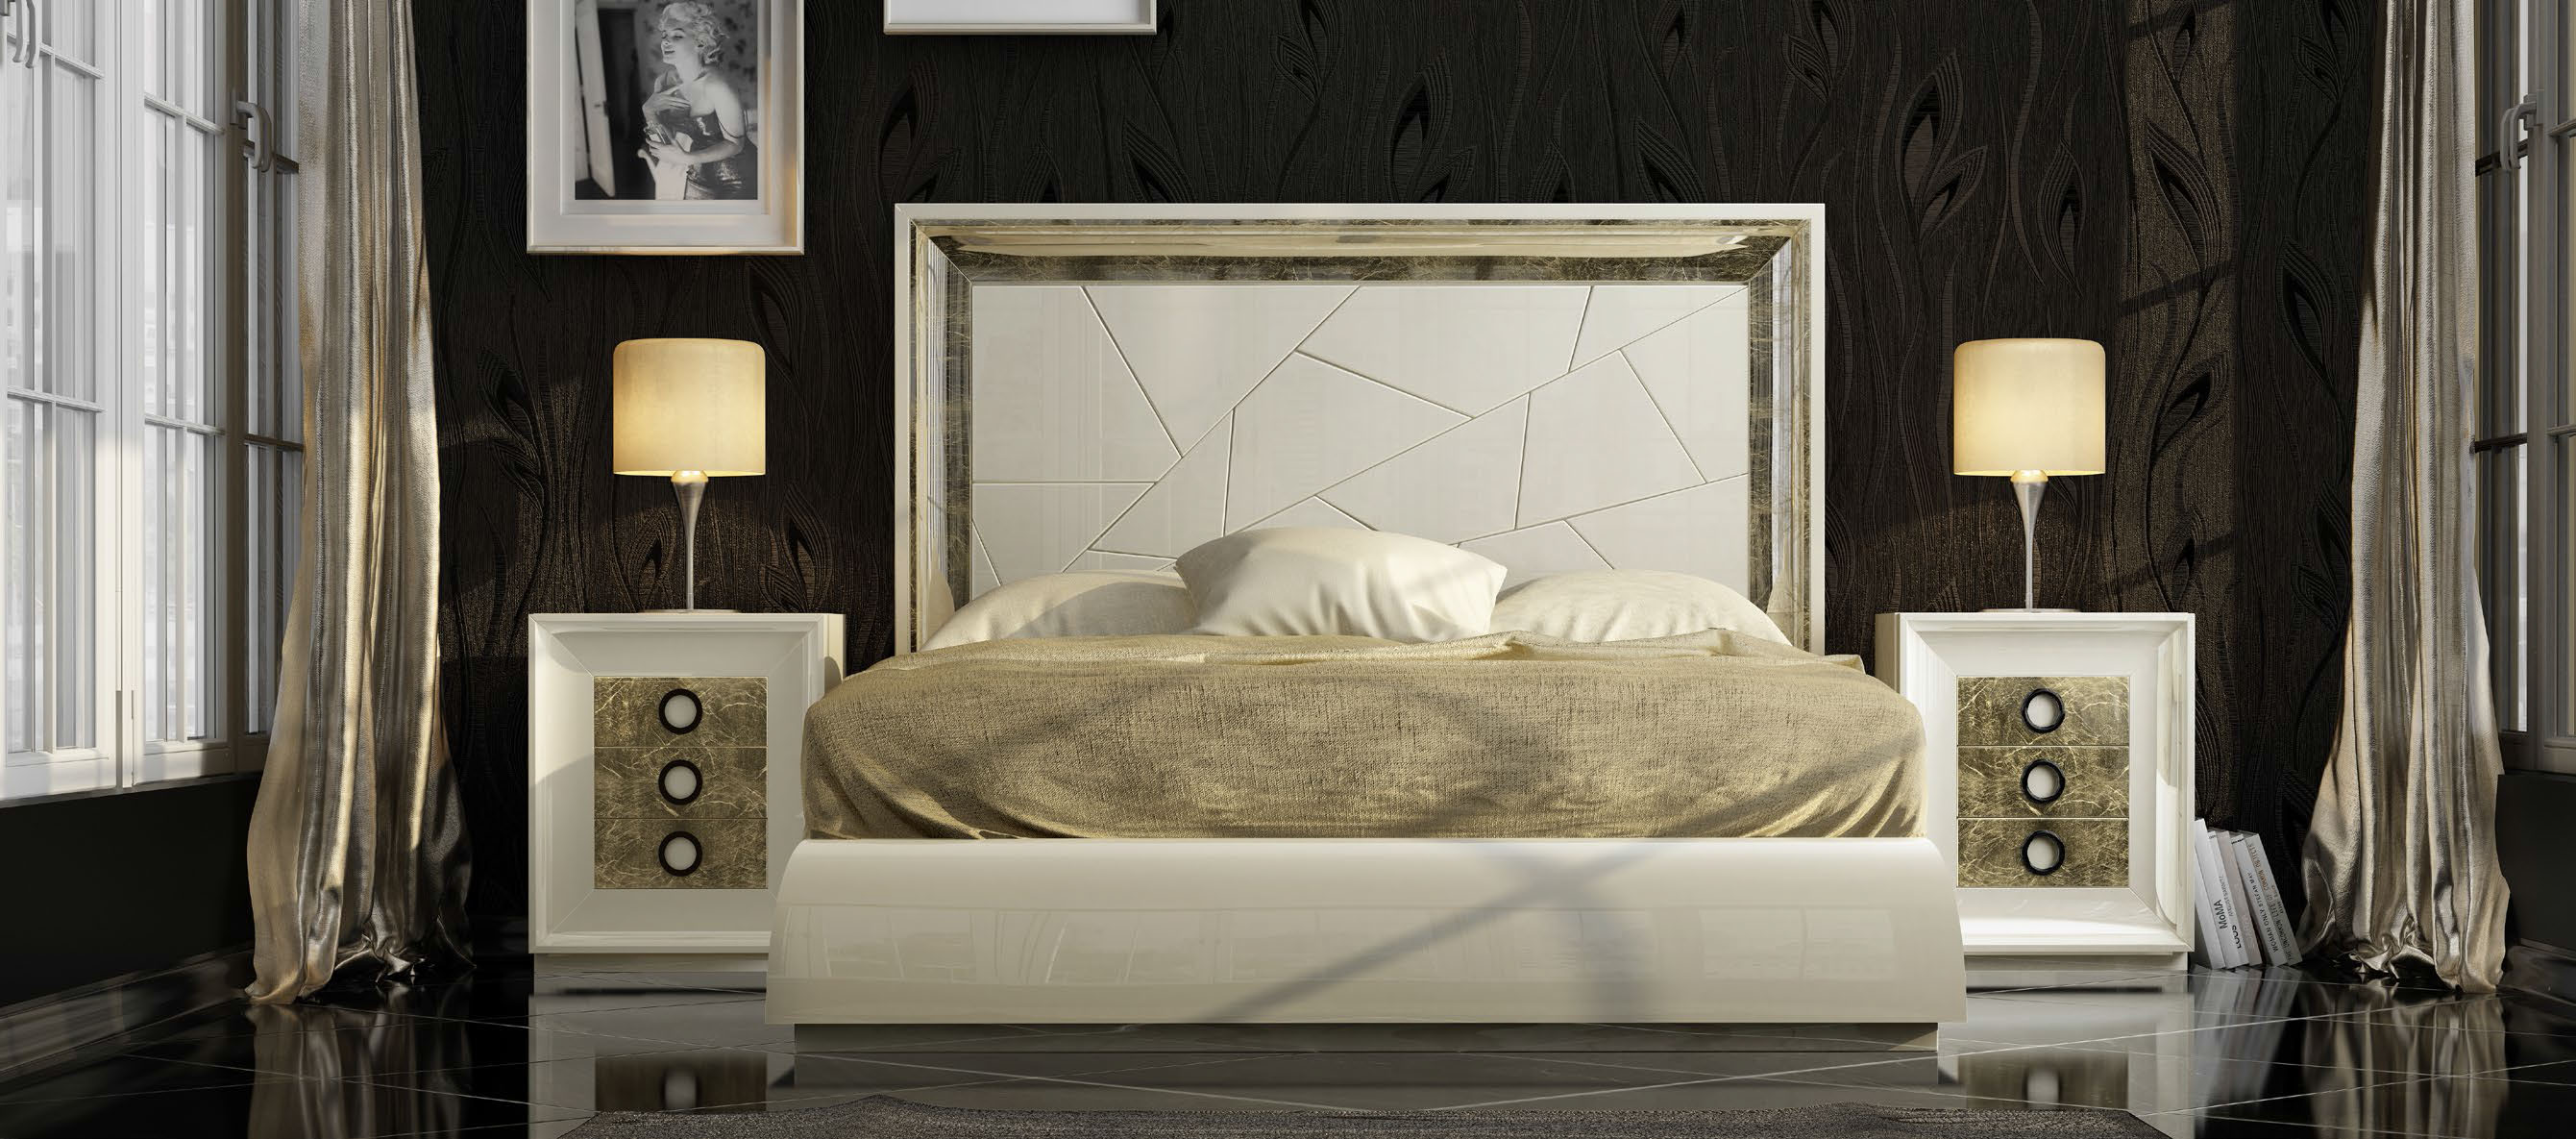 Brands Franco Furniture Bedrooms vol1, Spain DOR 97